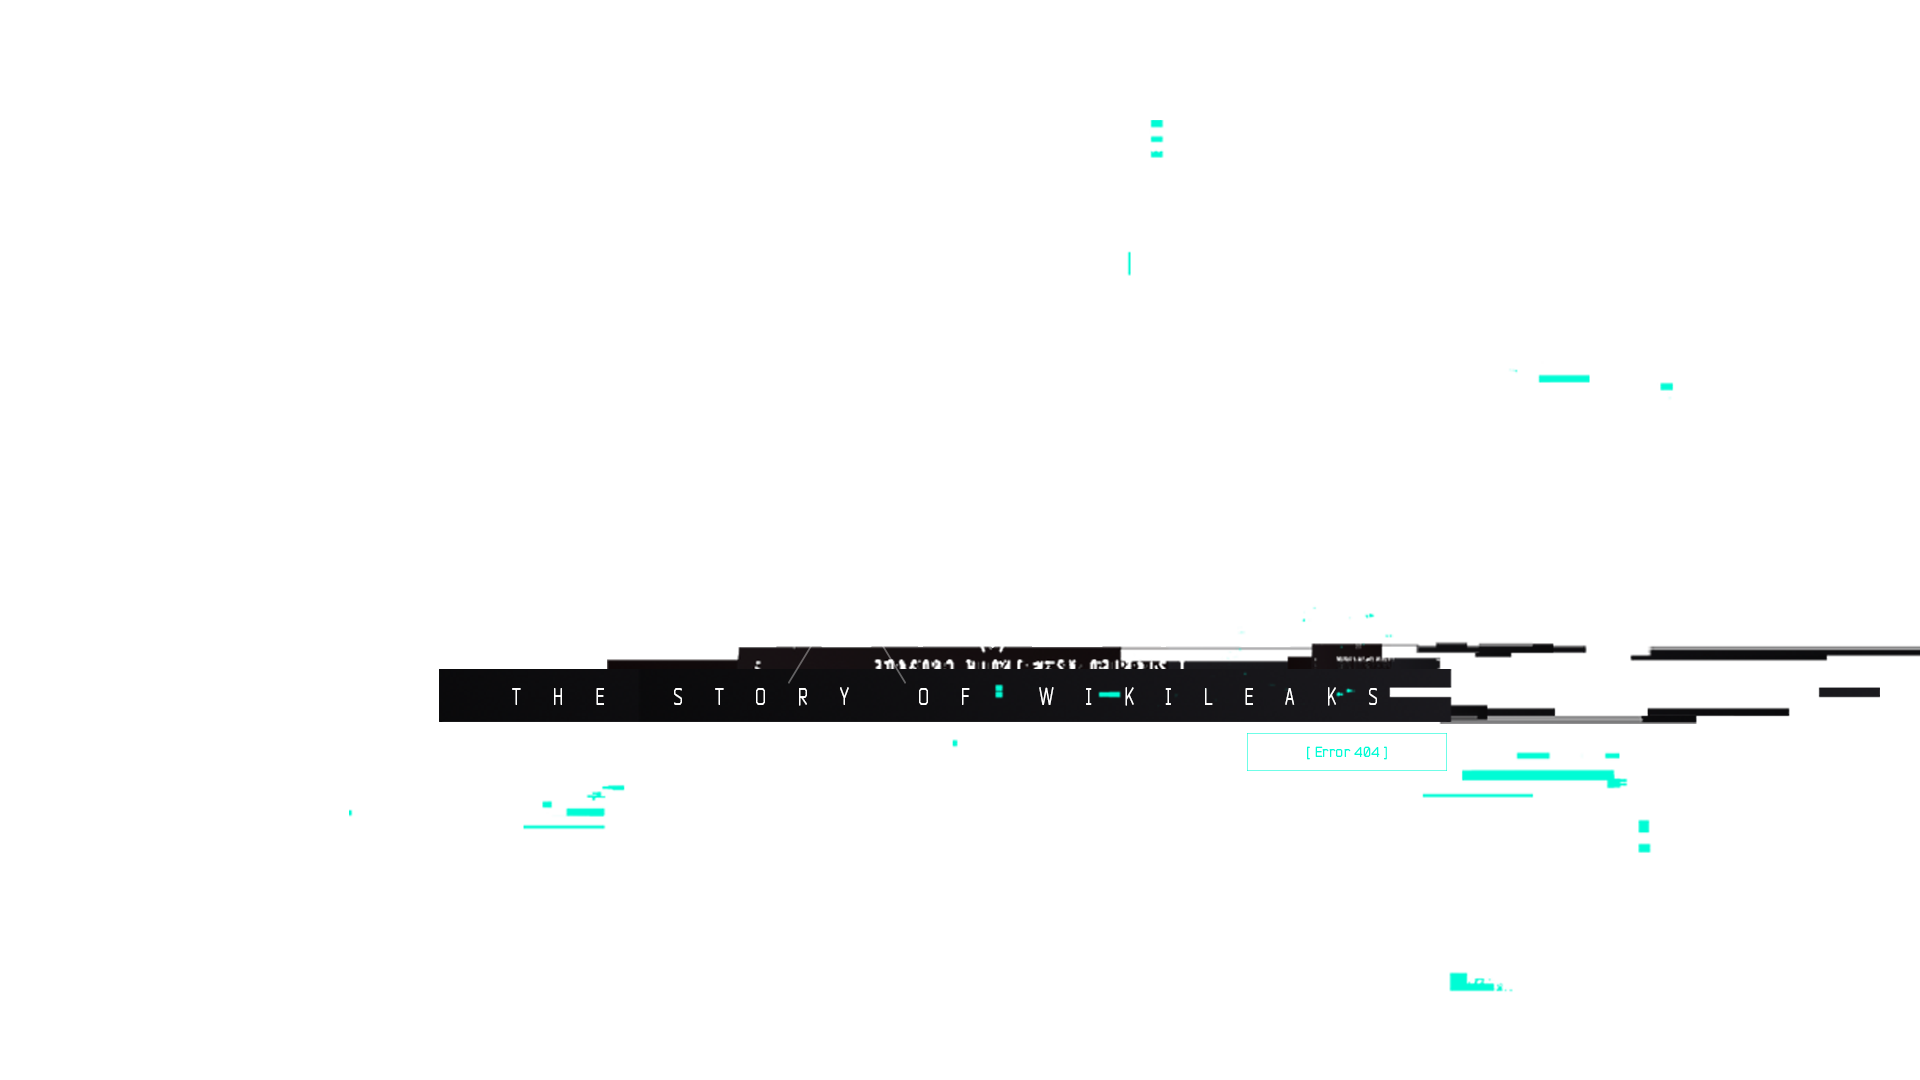 Nat Geo - We Steal Secrets: The Story of Wikileaks on Behancea57d7532933407.569d34cfeae47.png